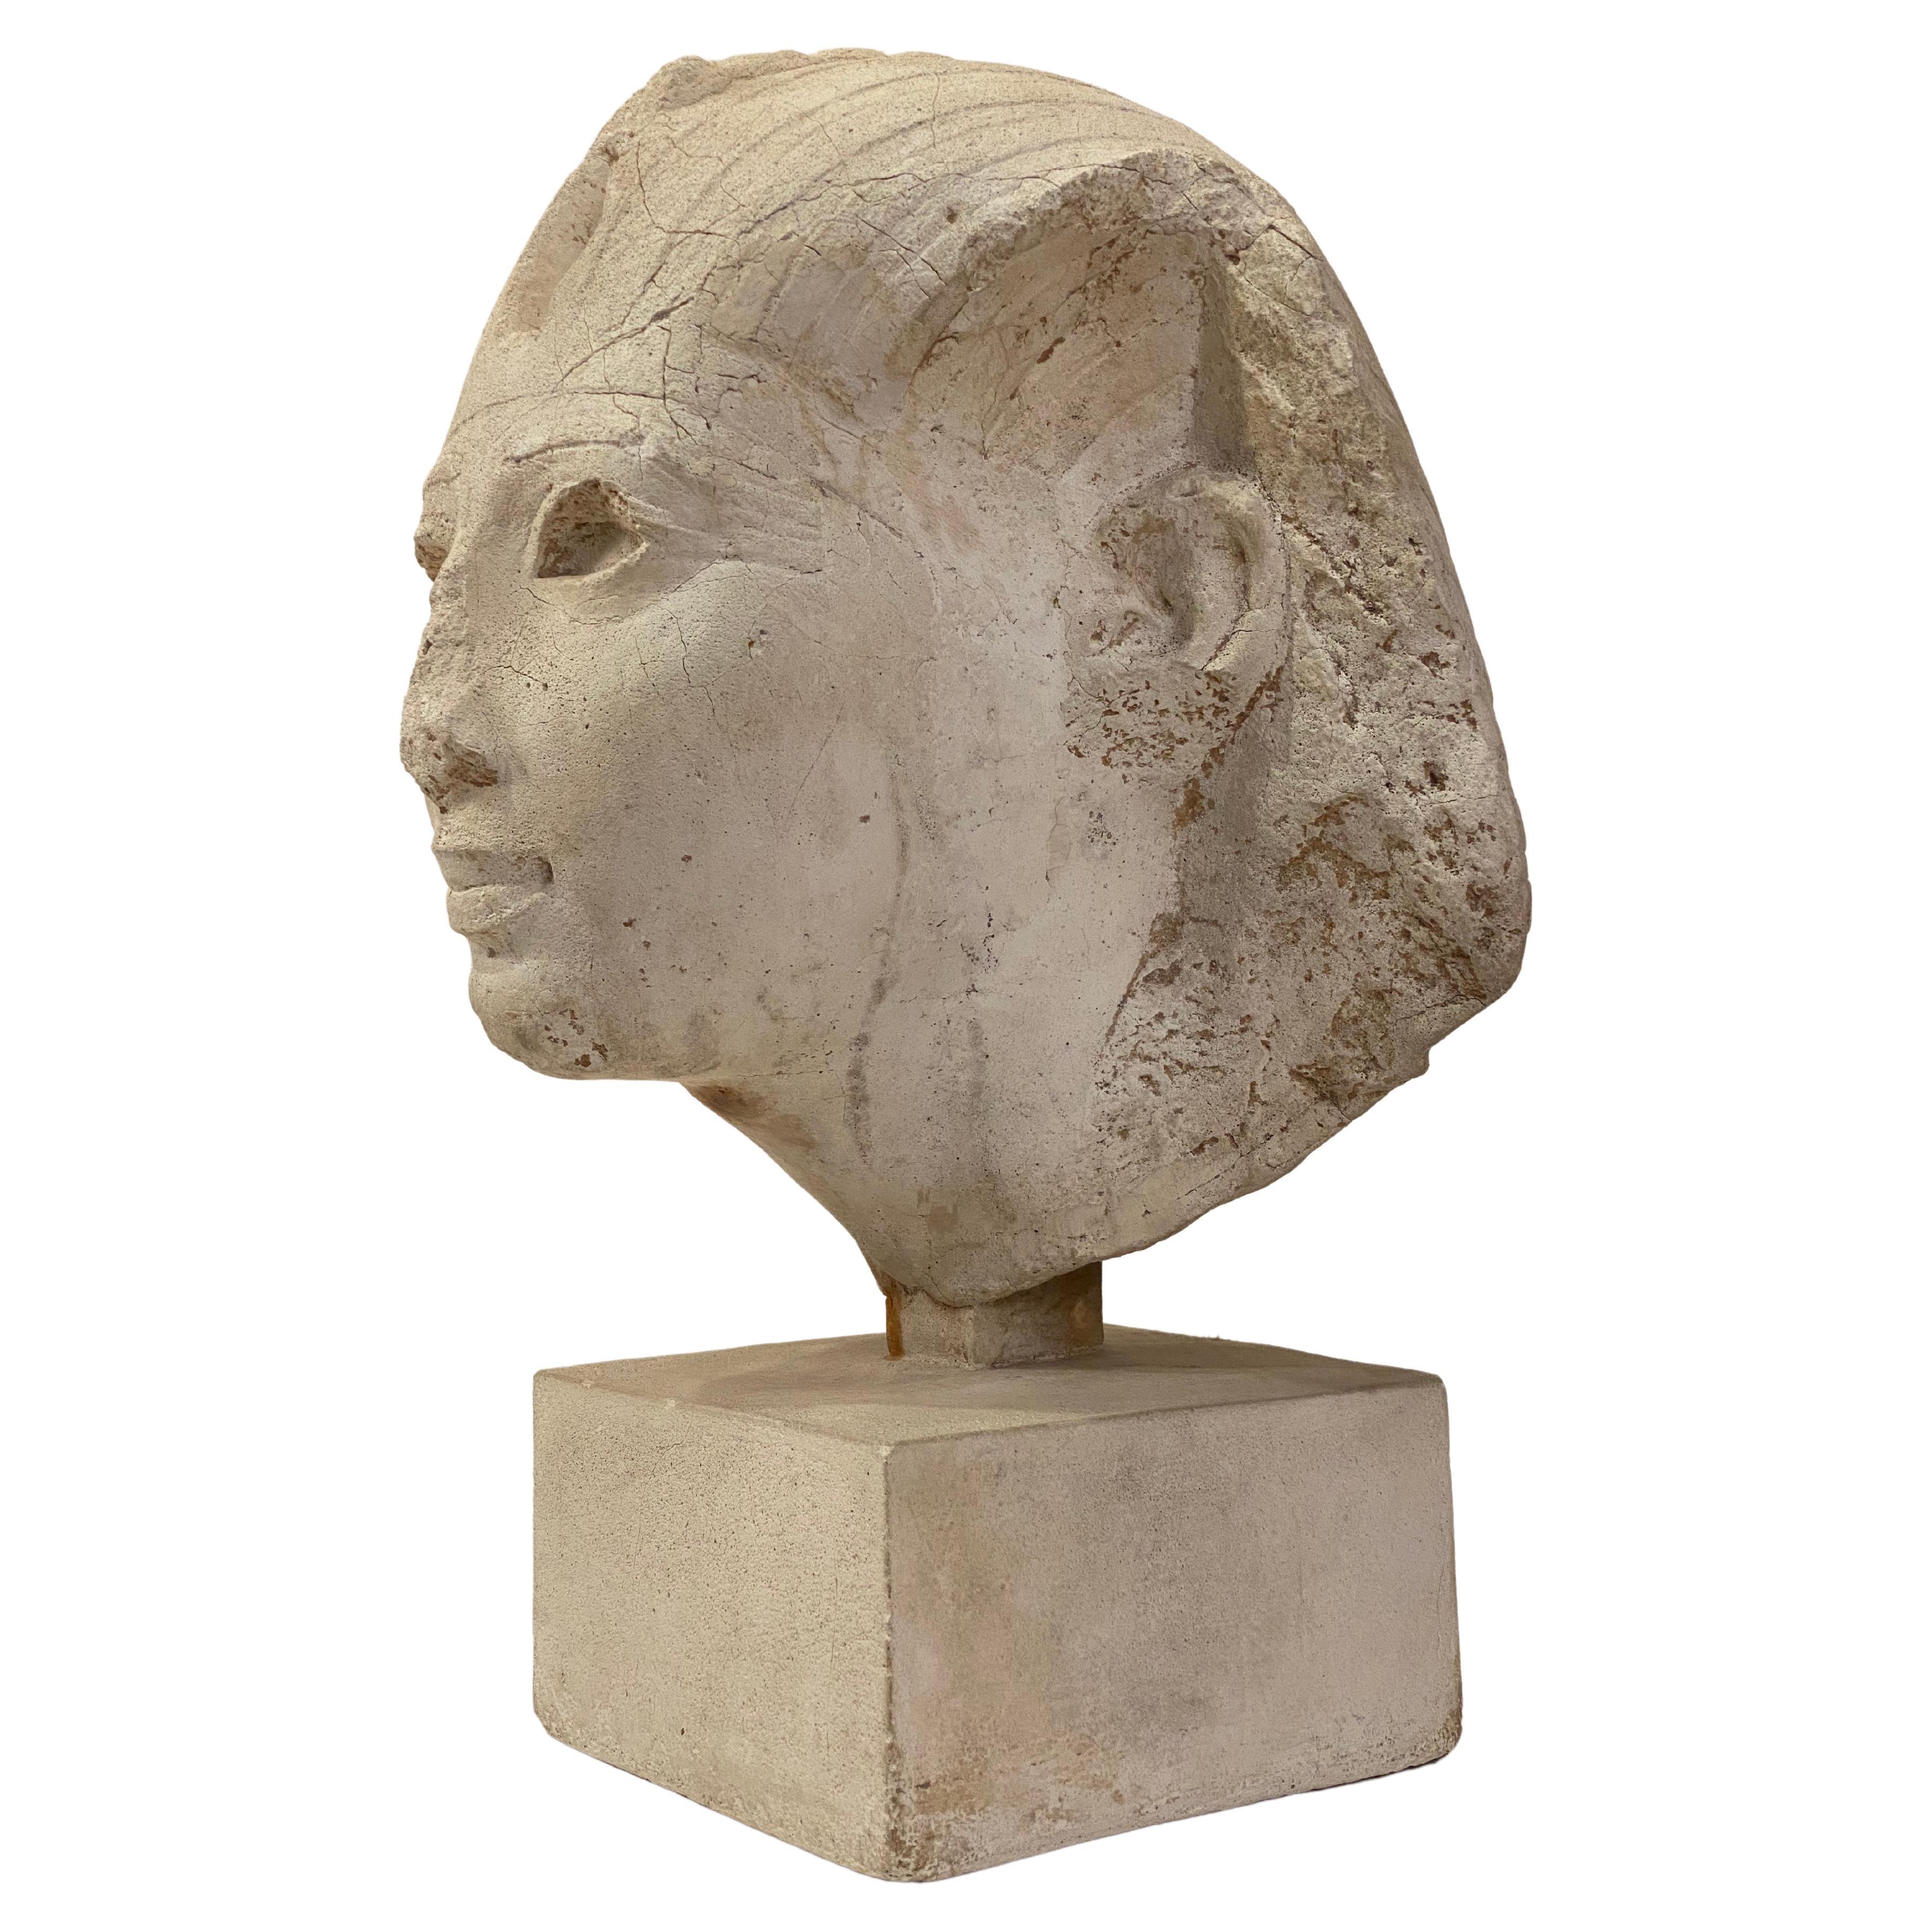 Decorative Plaster Pharaoh's Head